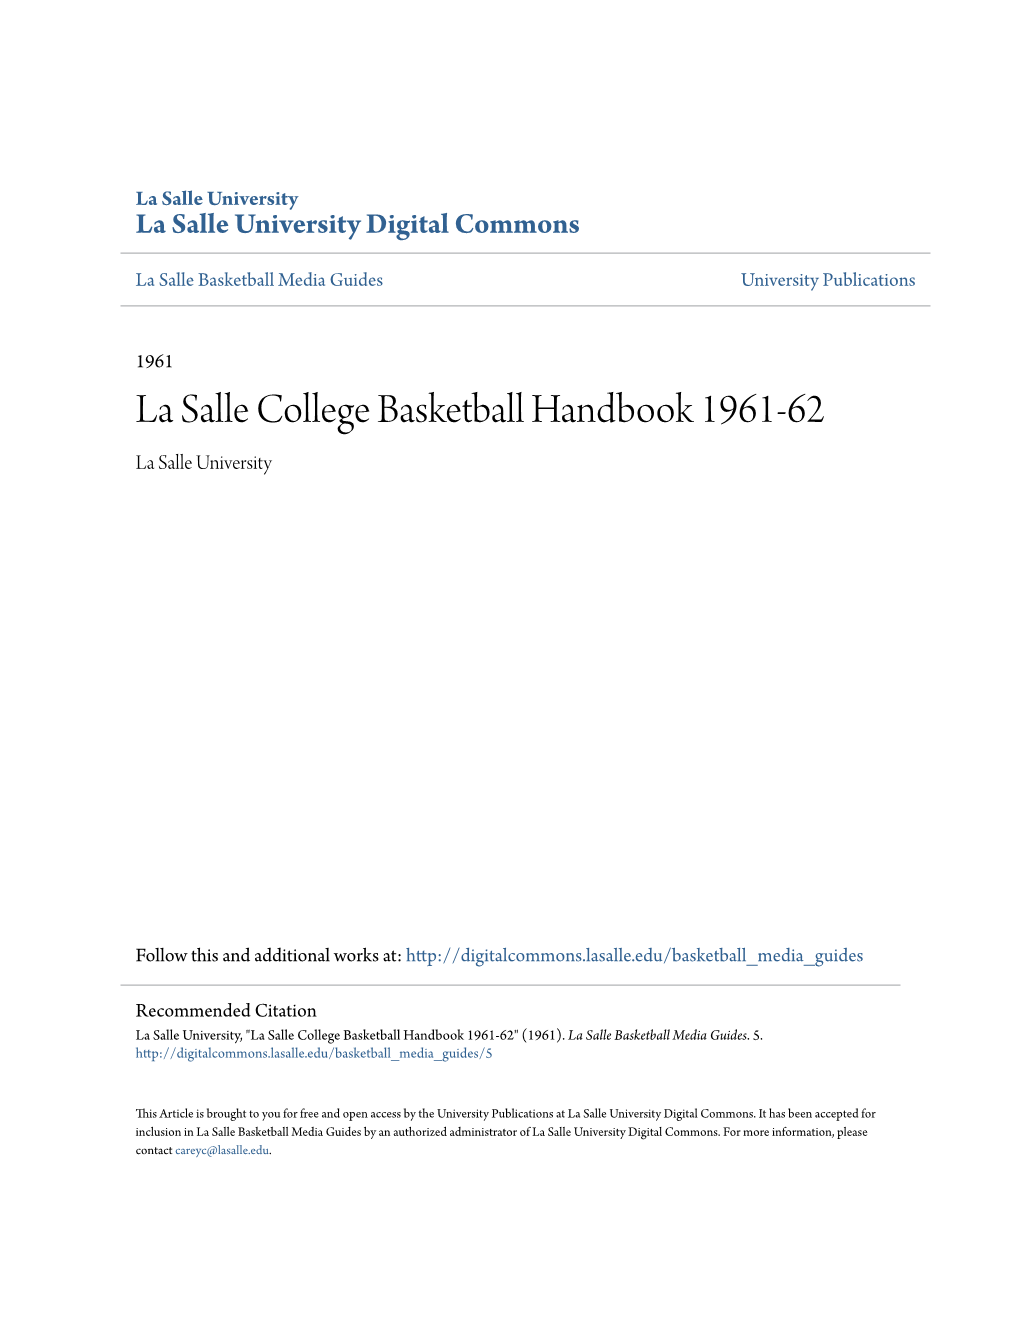 La Salle College Basketball Handbook 1961-62 La Salle University